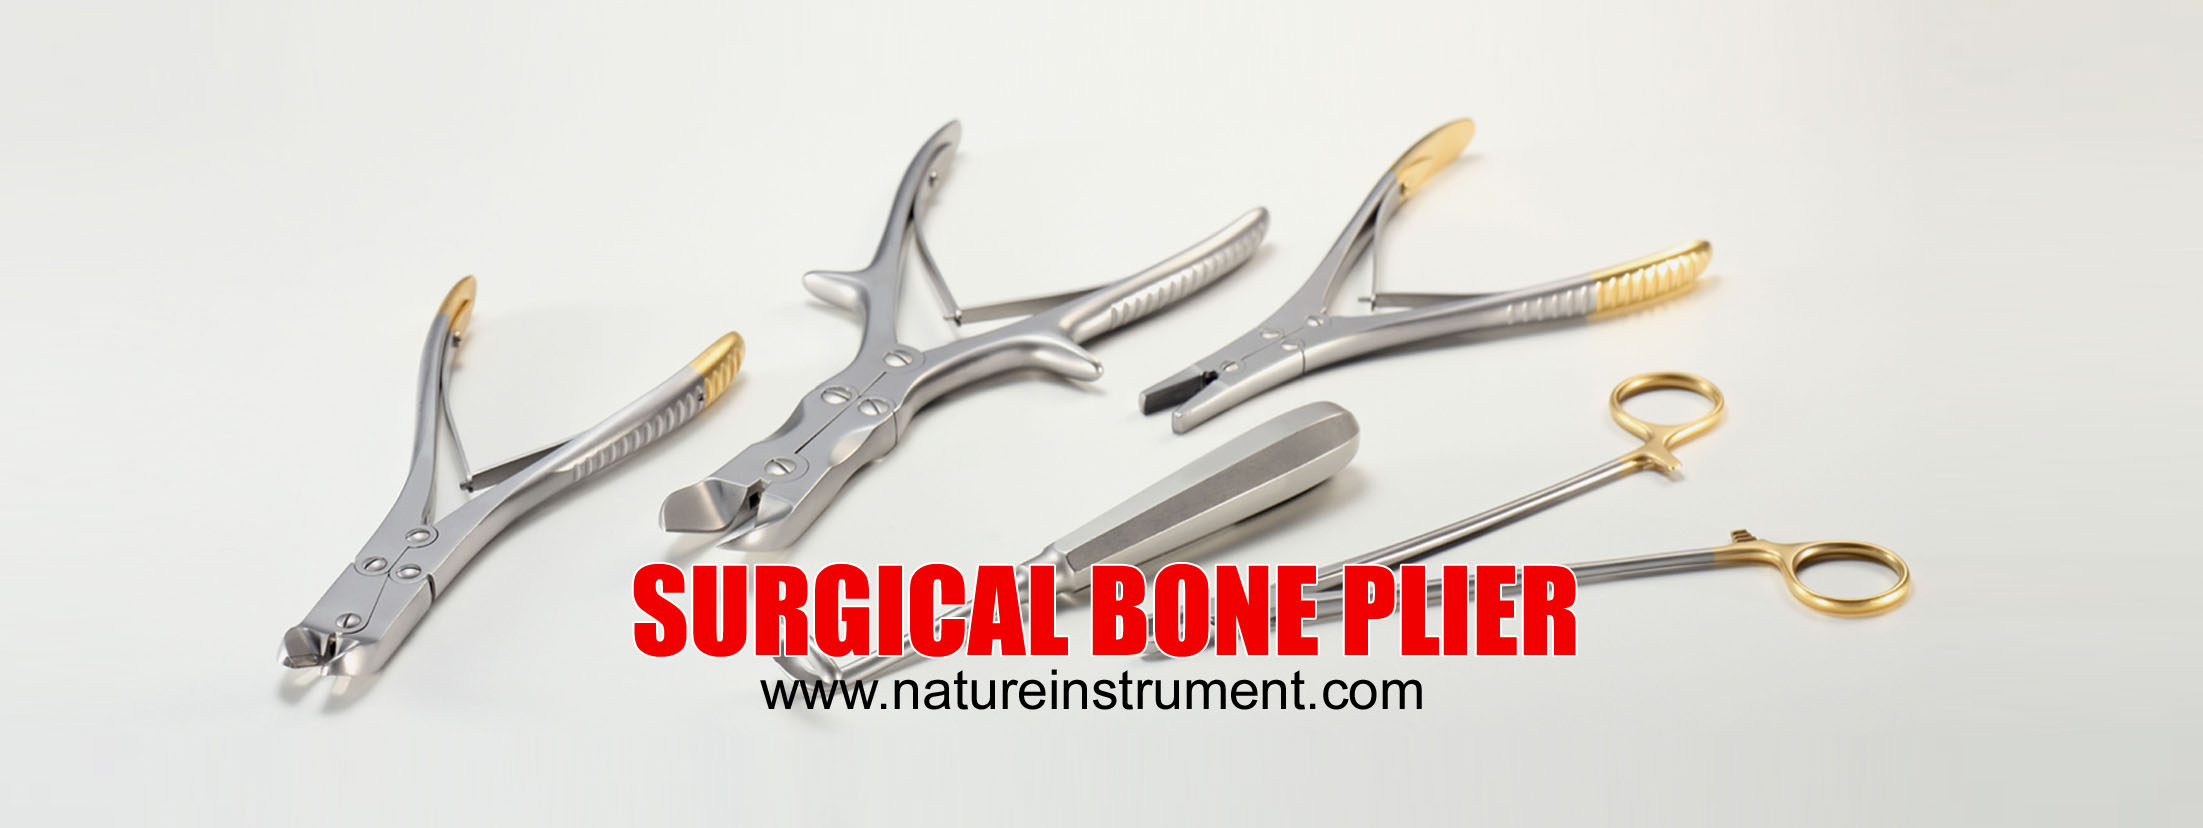 https://natureinstrument.com/source/banner/main/nature-instrument-surgical-bone-plier.jpg